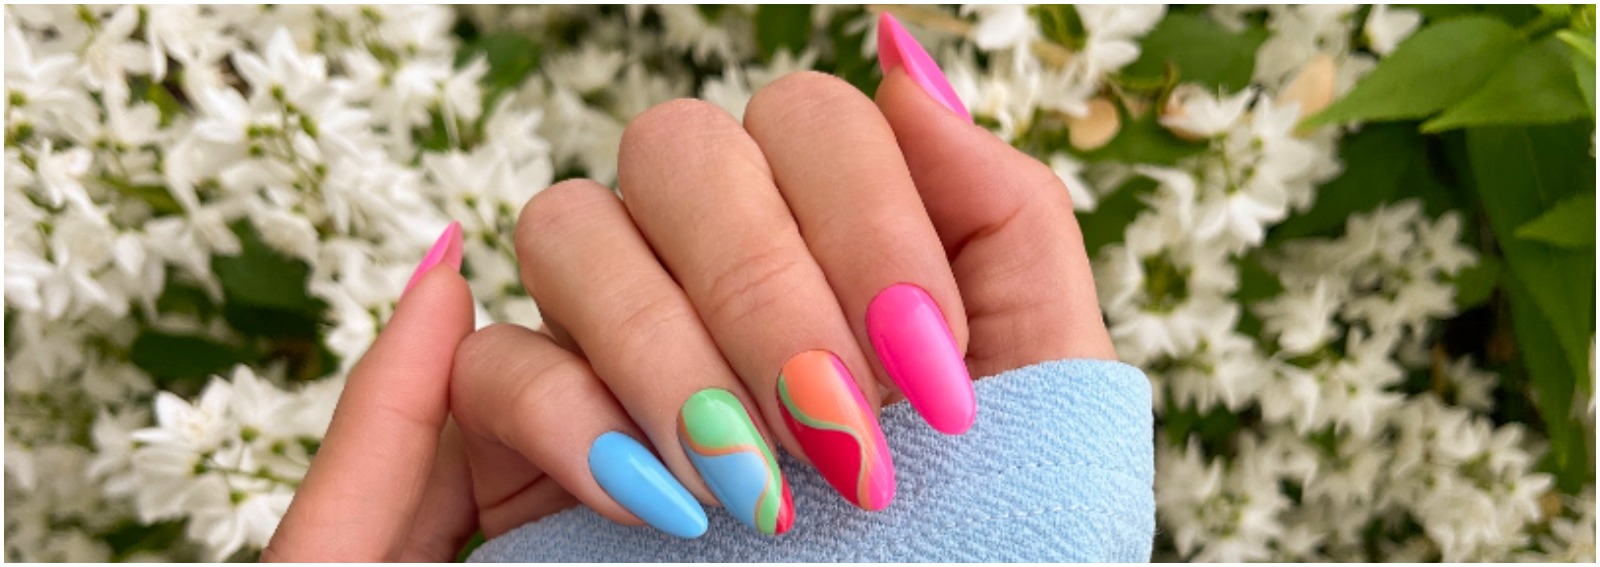 Skittle manicure unghie colorate nail art estate 2022 cover dekstop